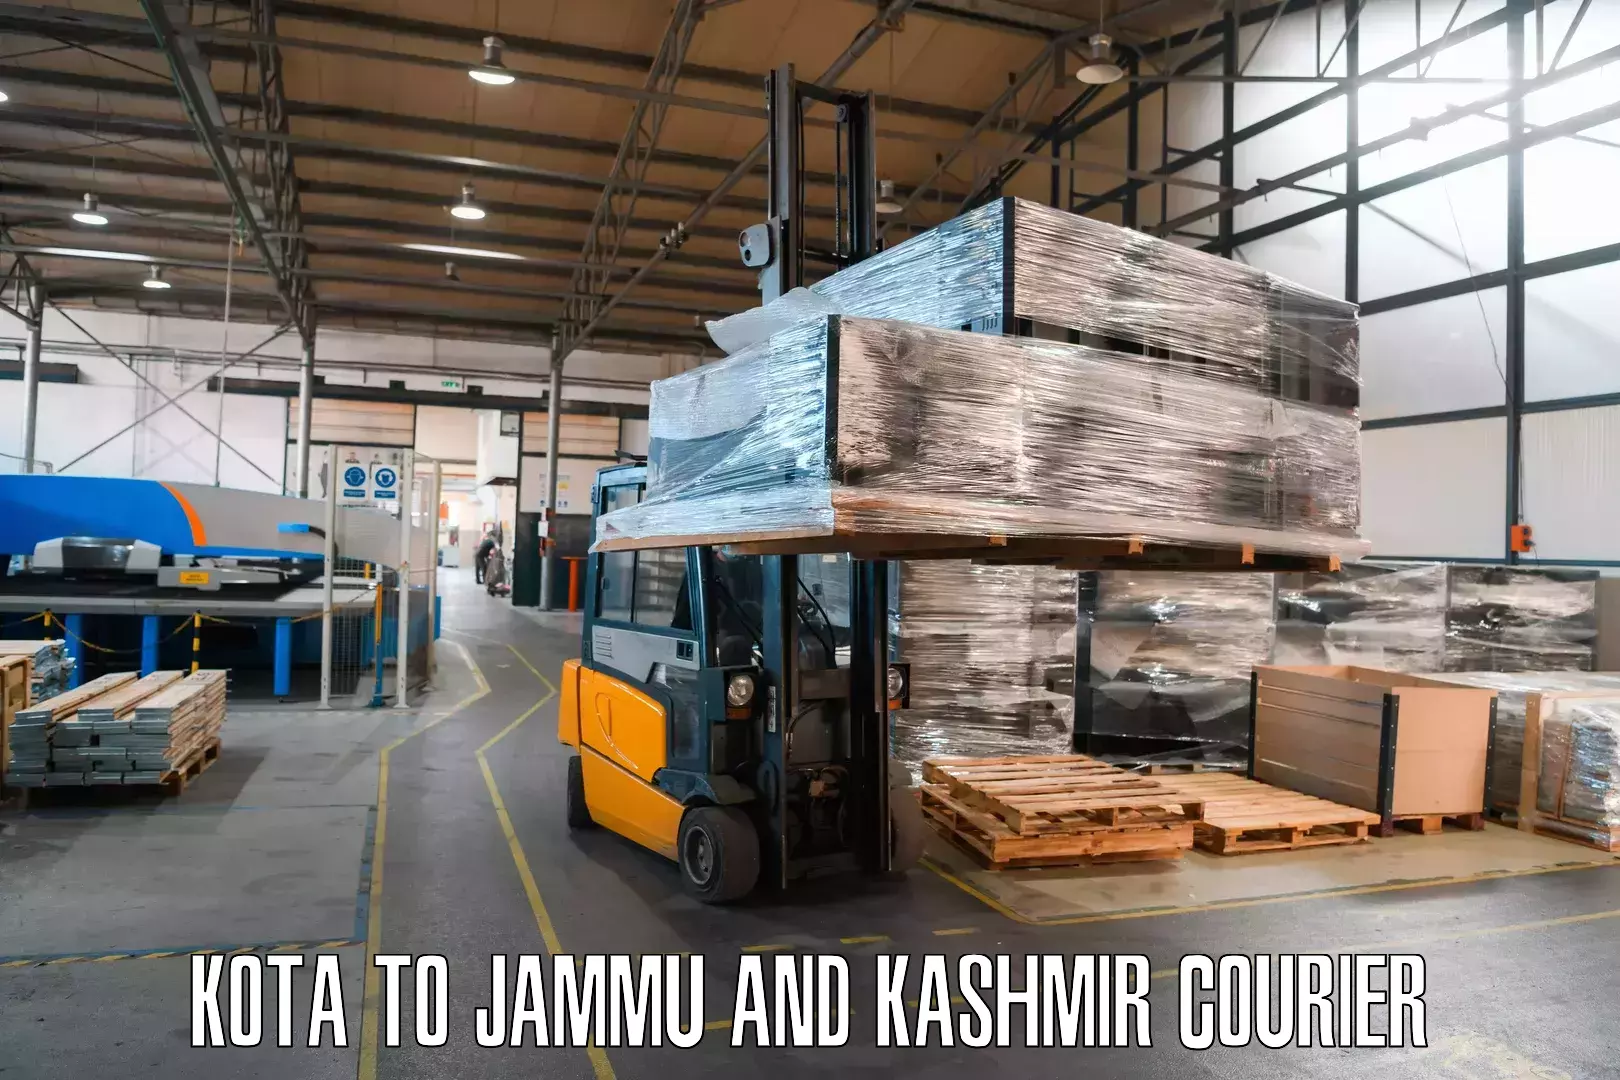 Next-day freight services Kota to Srinagar Kashmir